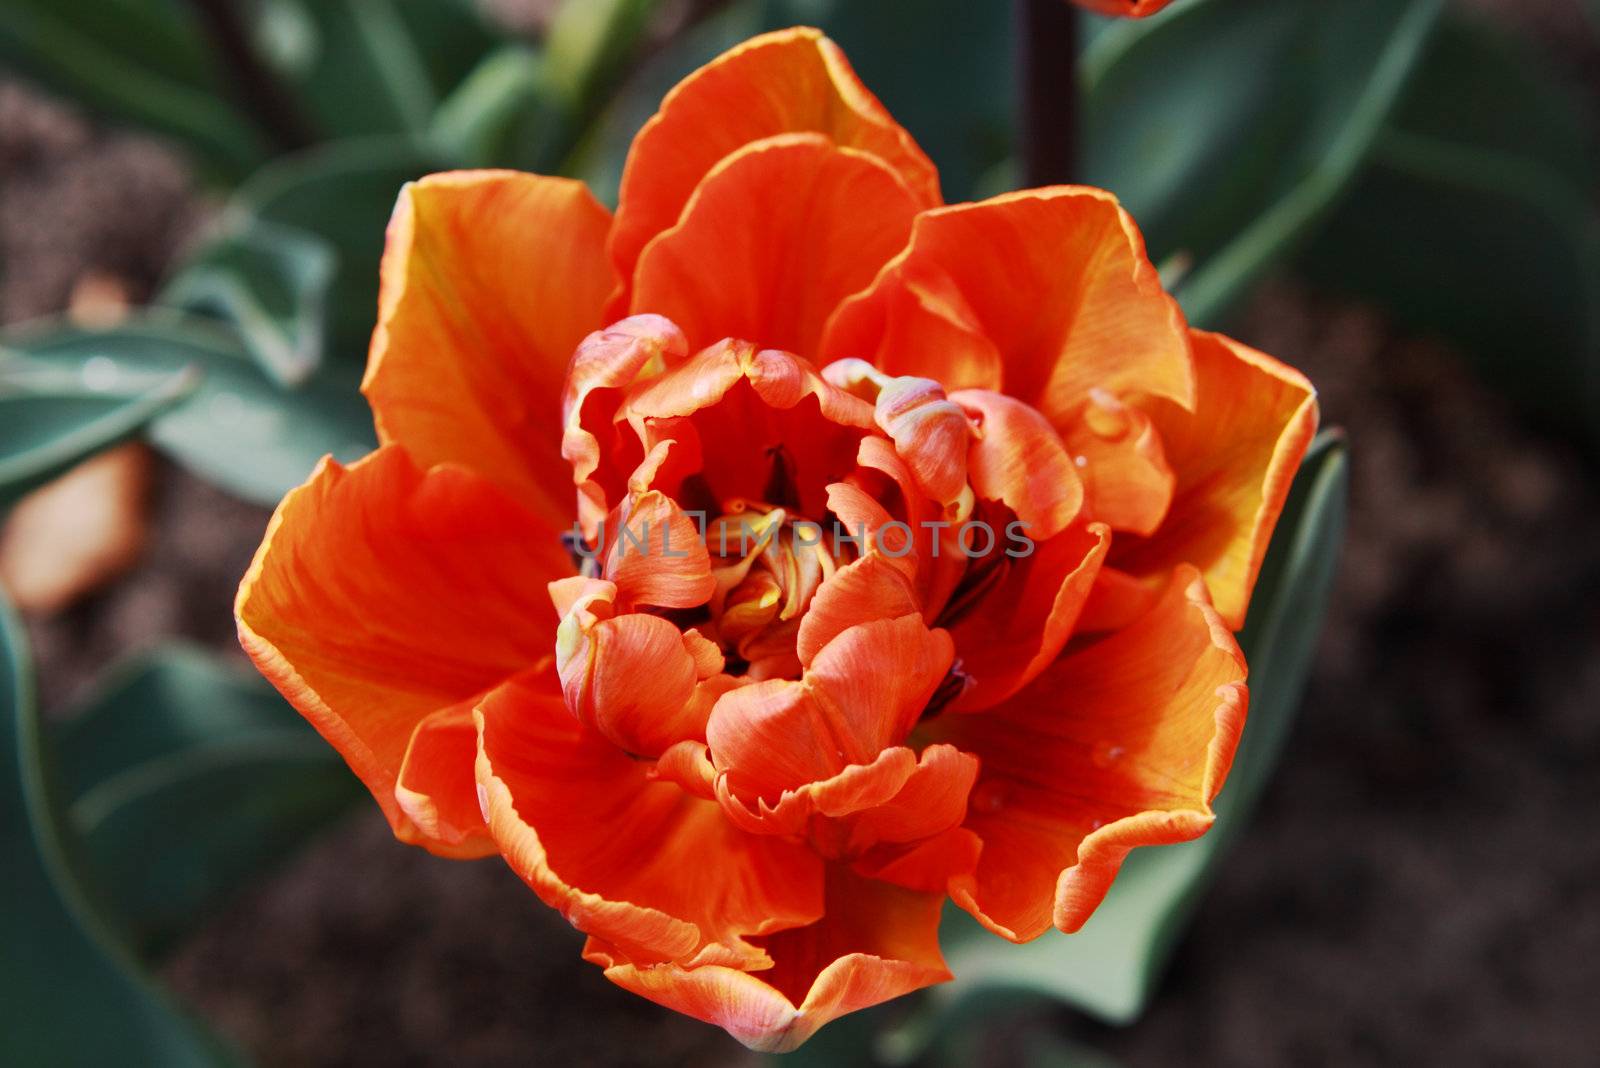 tulip "Orange Princess" close up by catolla